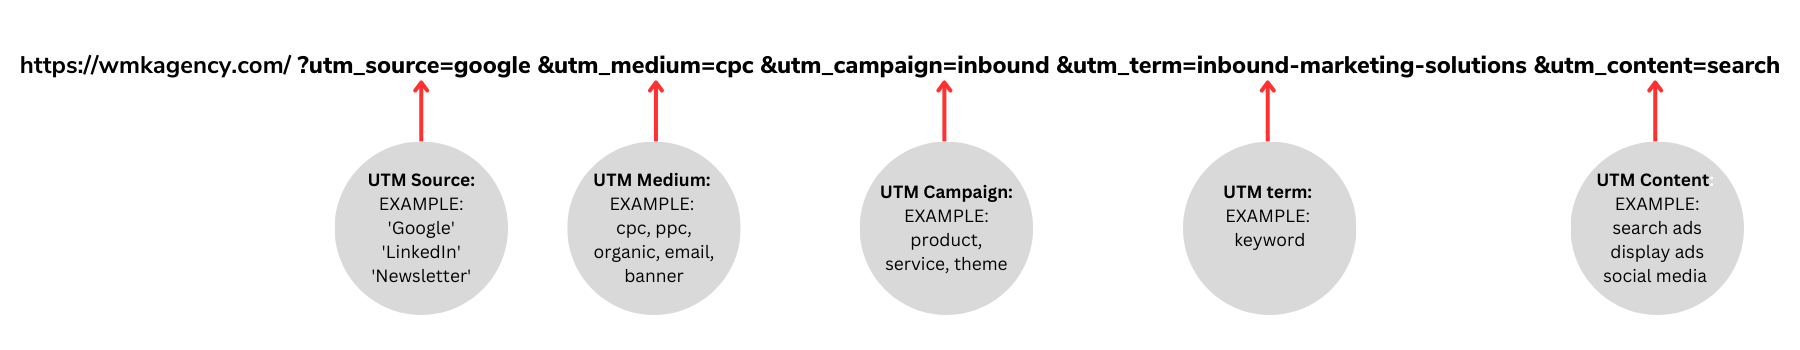 example of UTM parameters